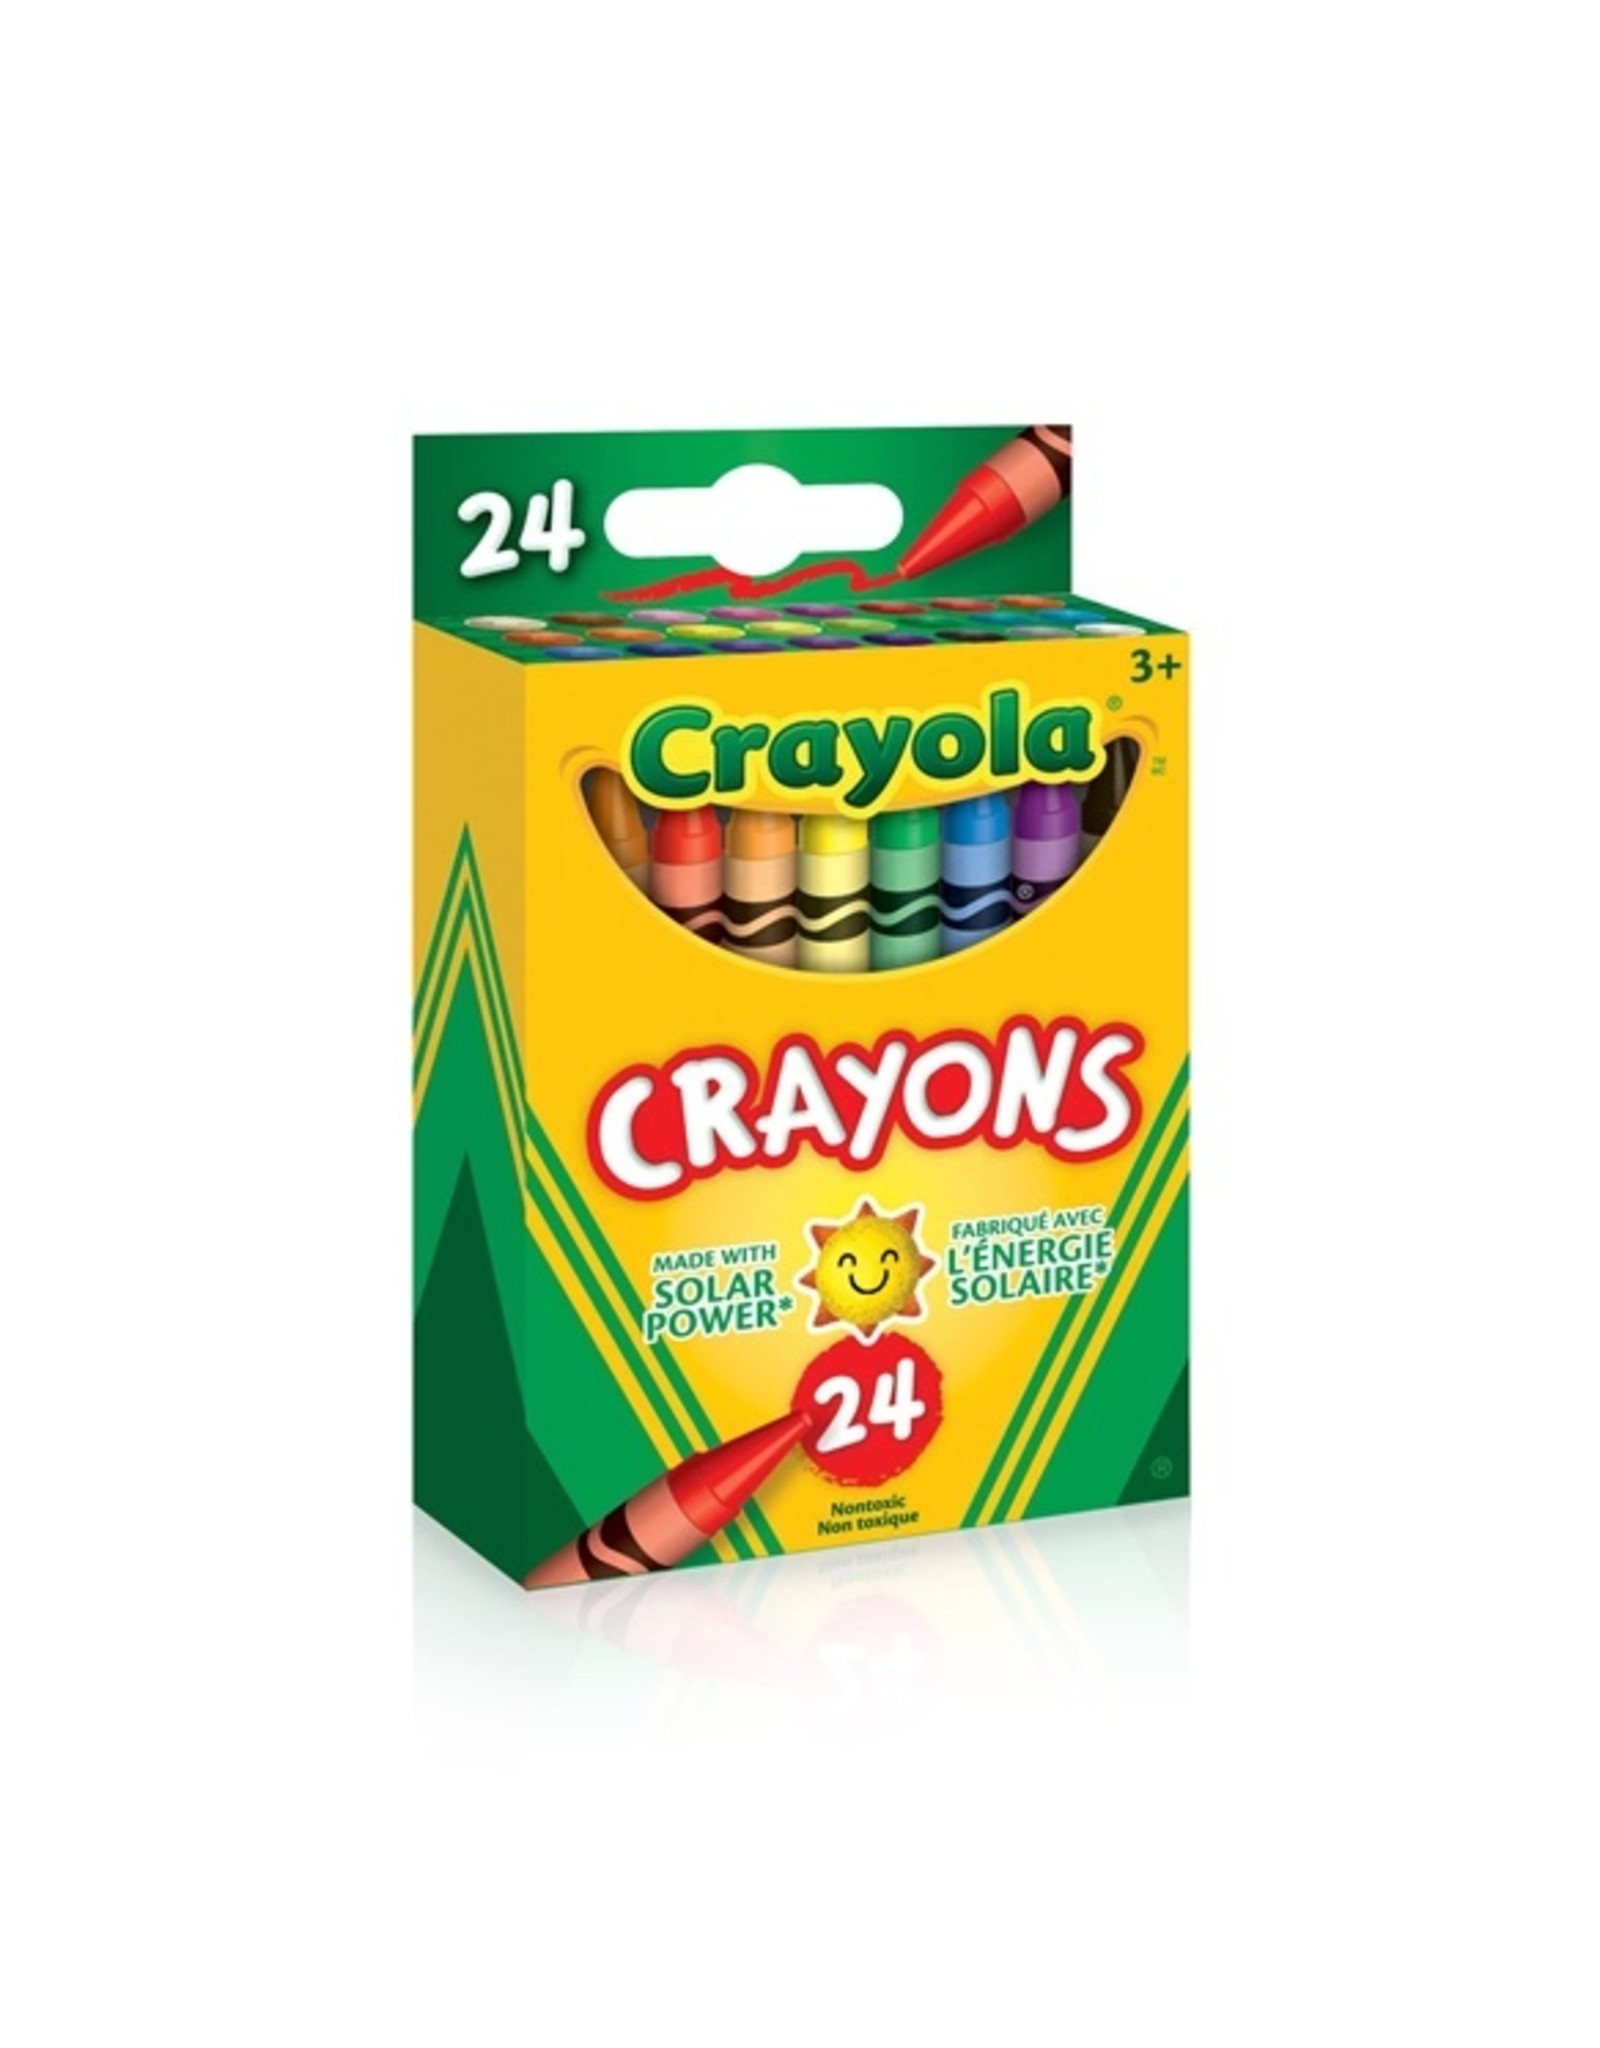 Crayons, 24 CT - regular - Stollery Kids Store